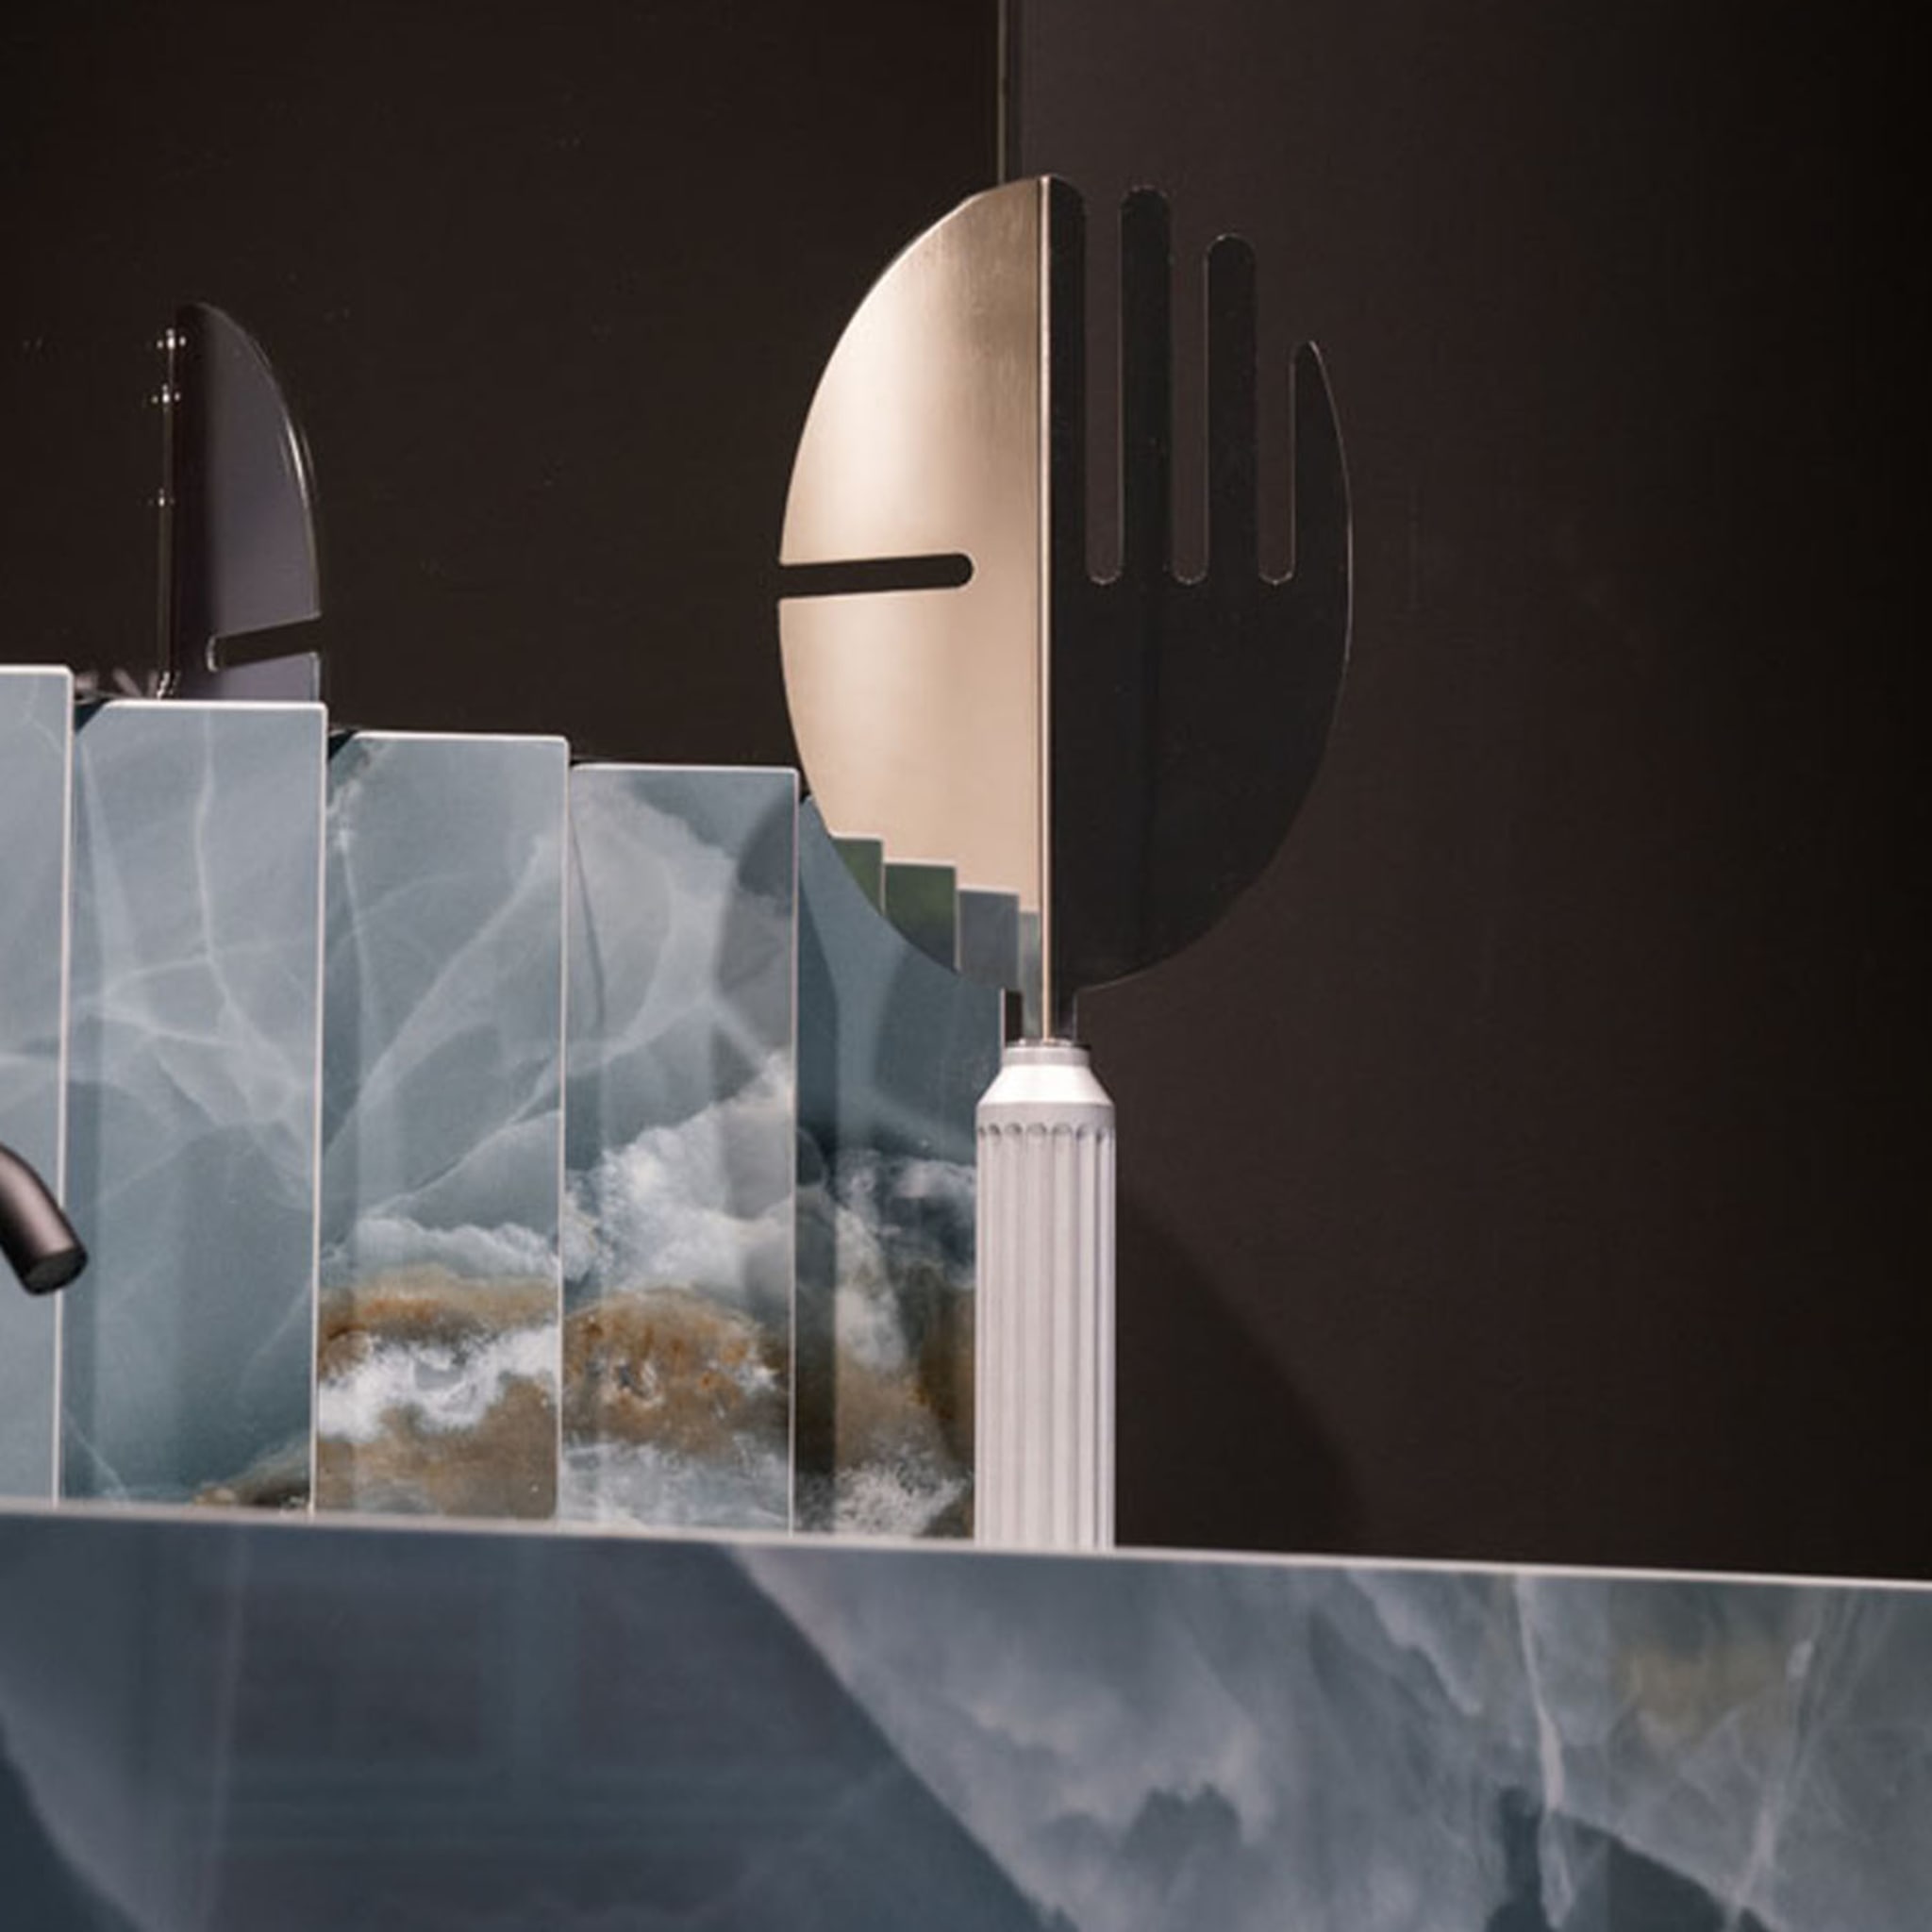 Ratio Bathroom Sink with Backsplash by Sapiens Design - Alternative view 2